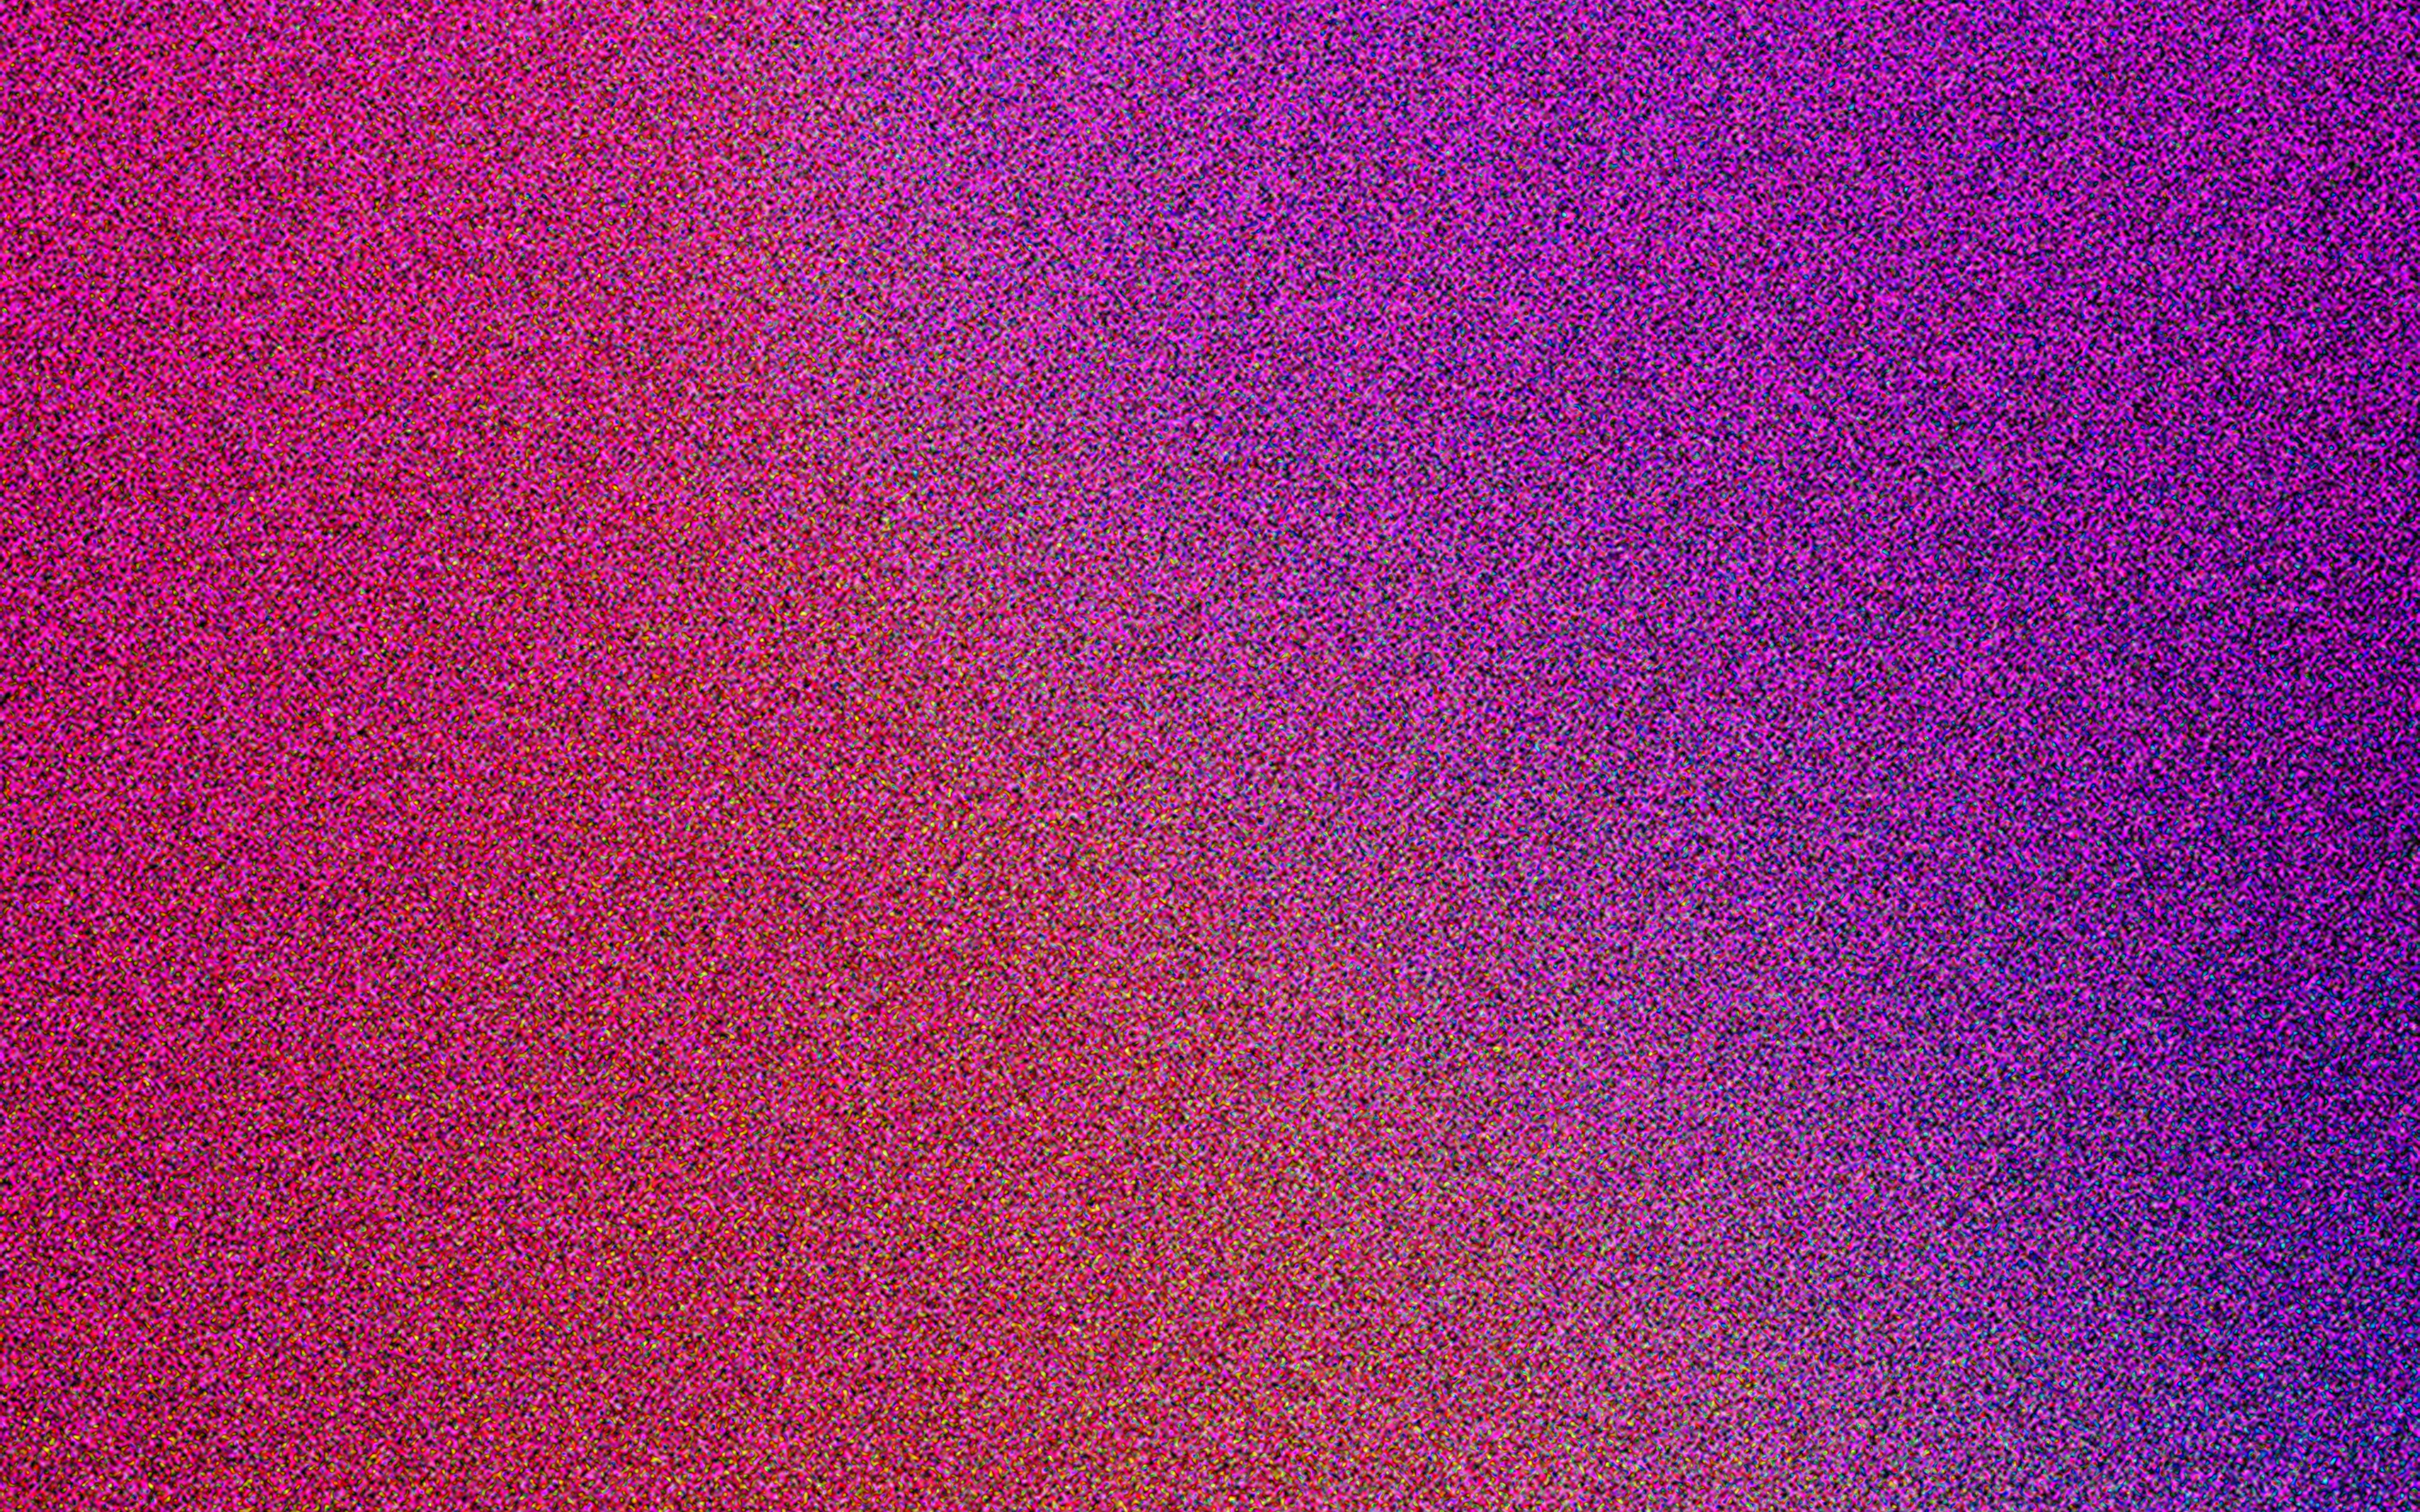 wallpaper for desktop, laptop. dots pink purple pattern background